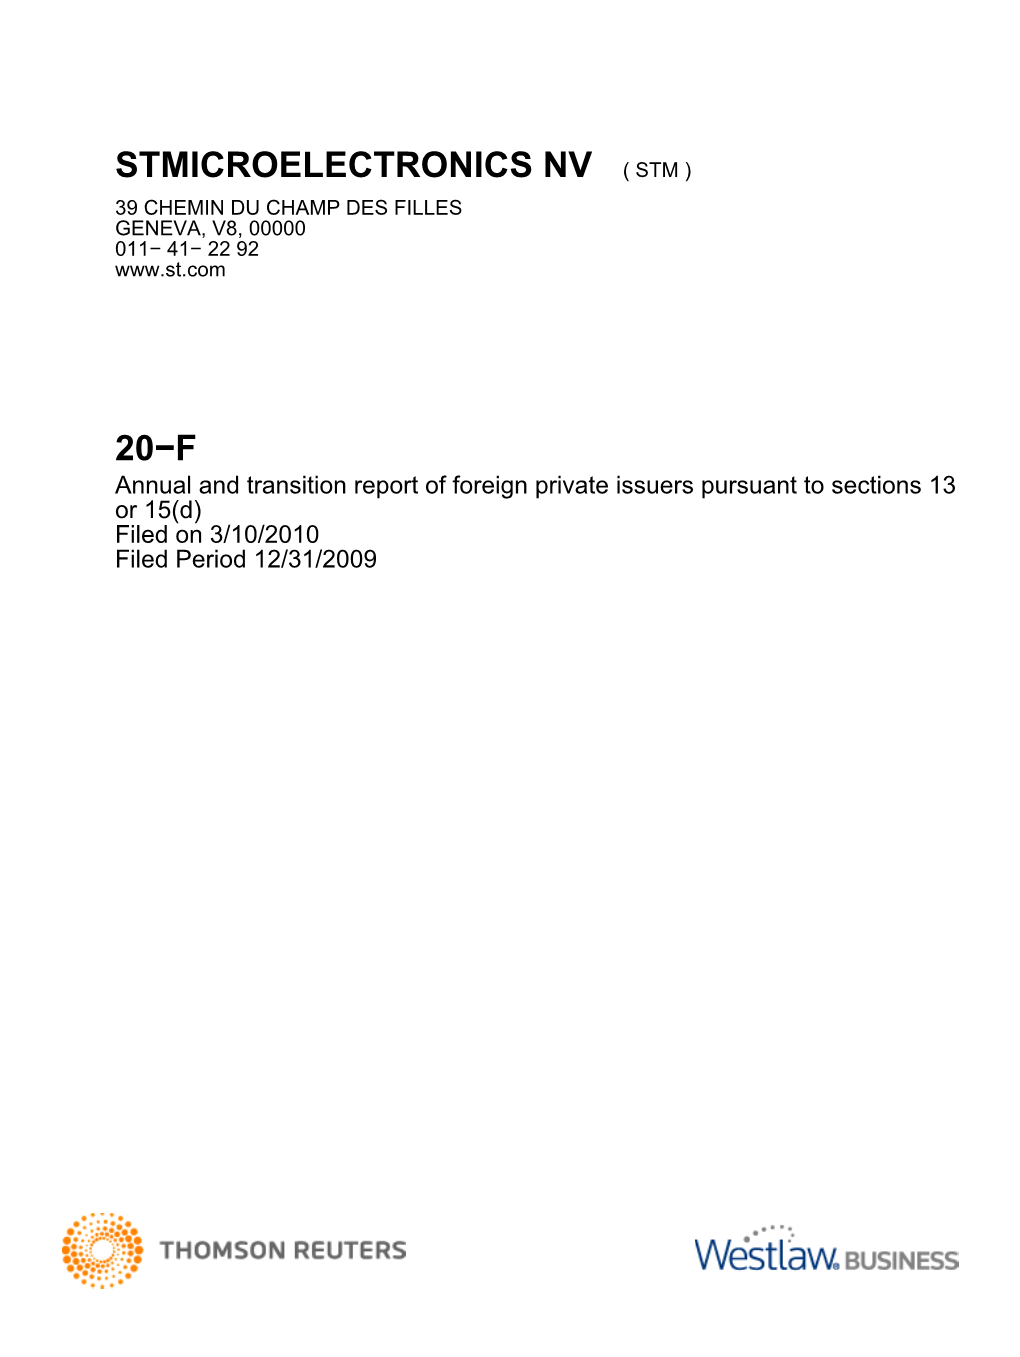 2009 Annual Report (Form 20-F)